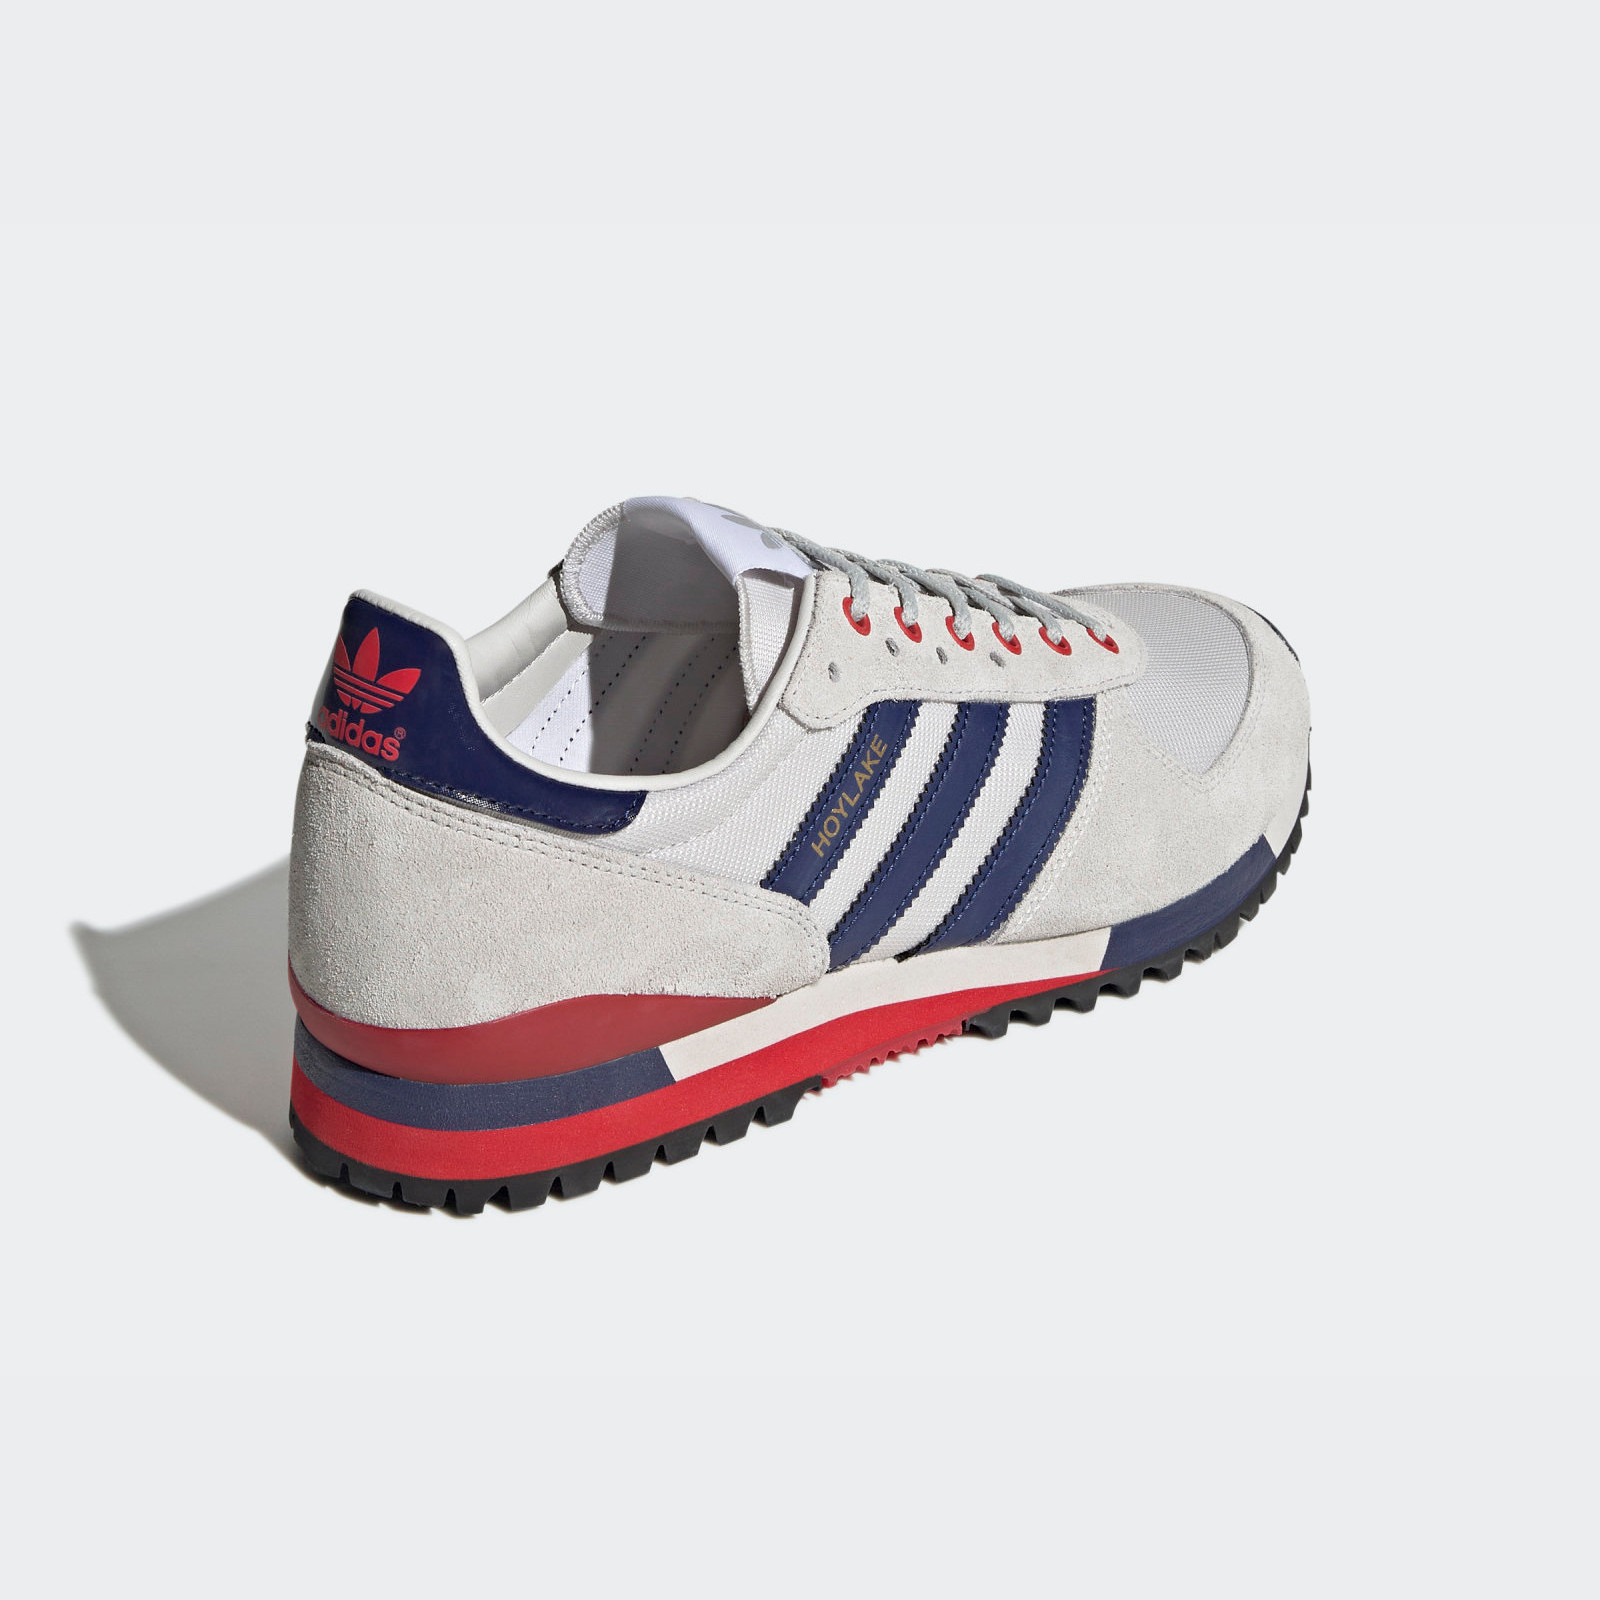 Adidas SPZL Hoylake
Grey / Red